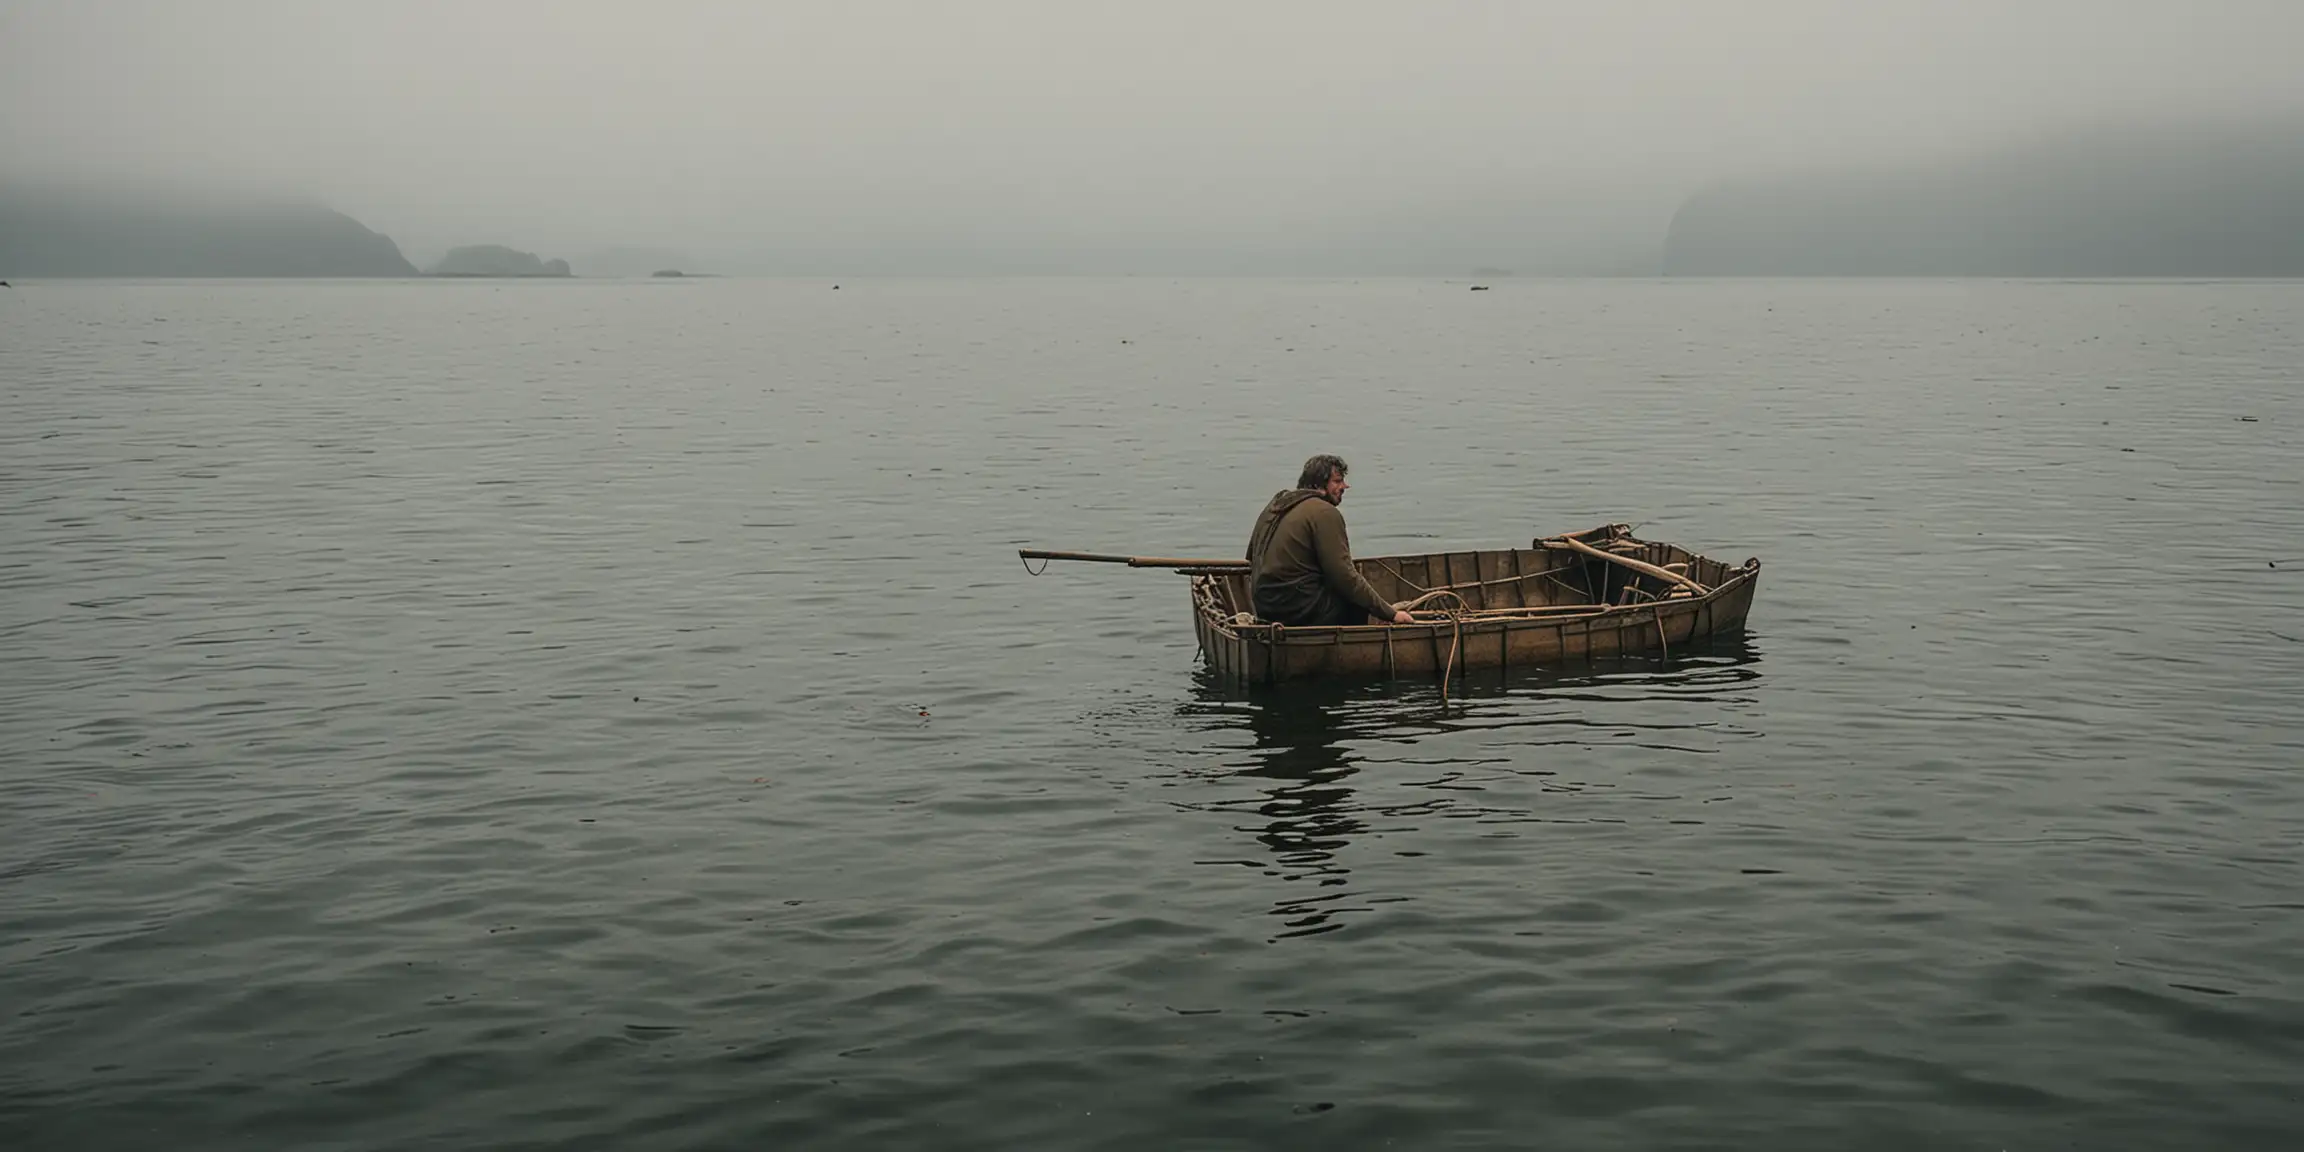 Solitary Man Adrift in Aging Raft Amidst Vast Ocean